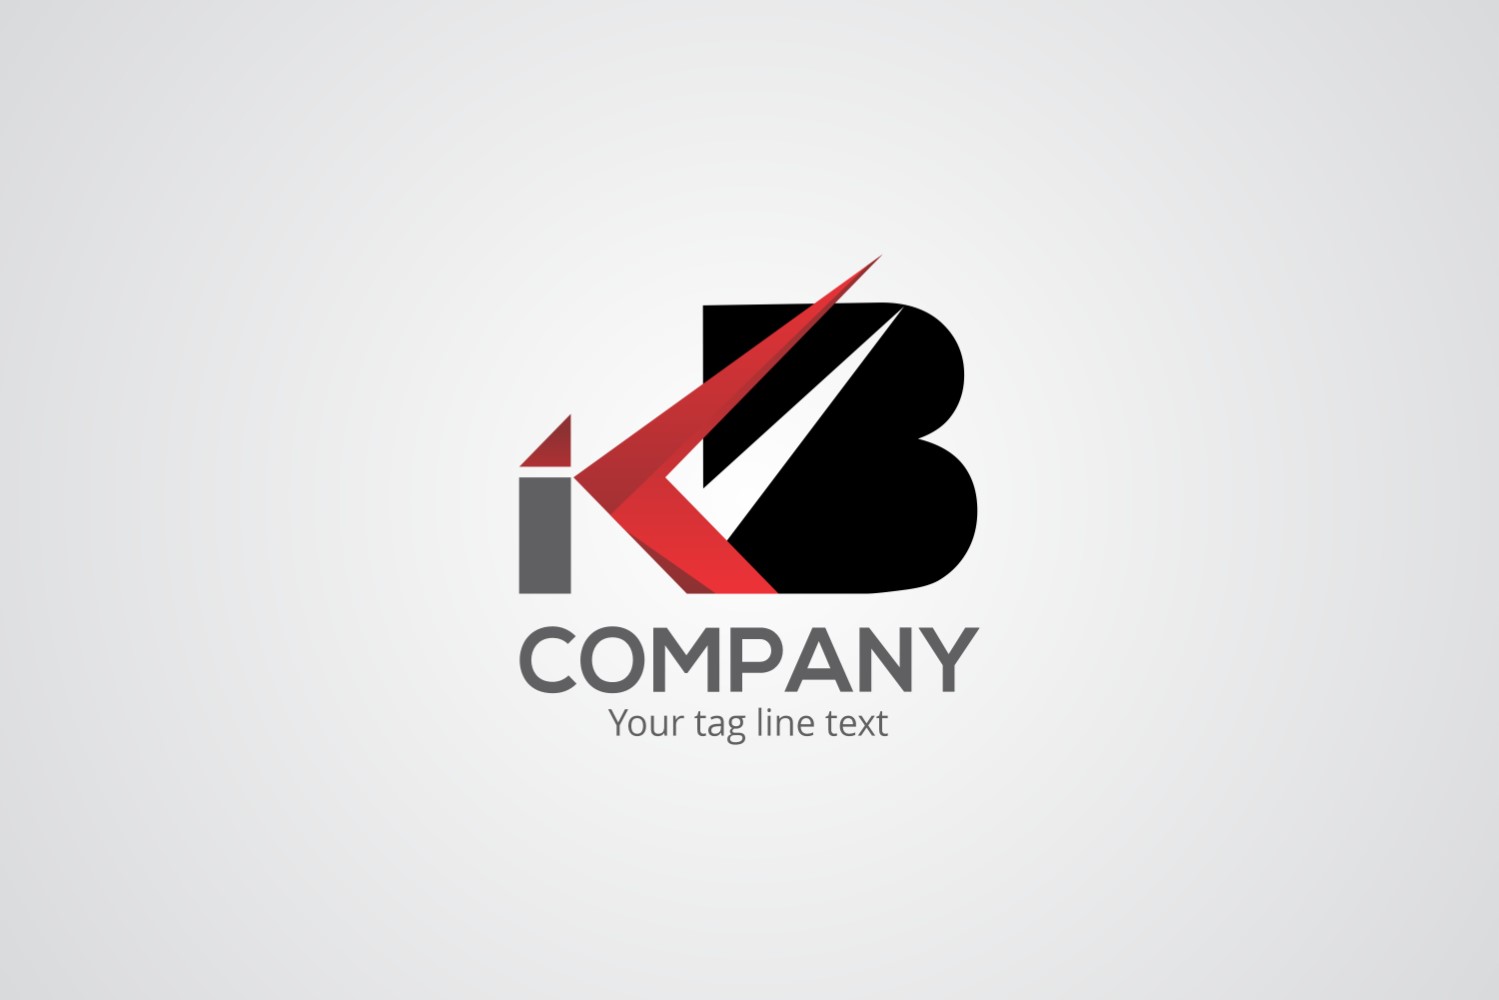 KB Company Logo Design Template